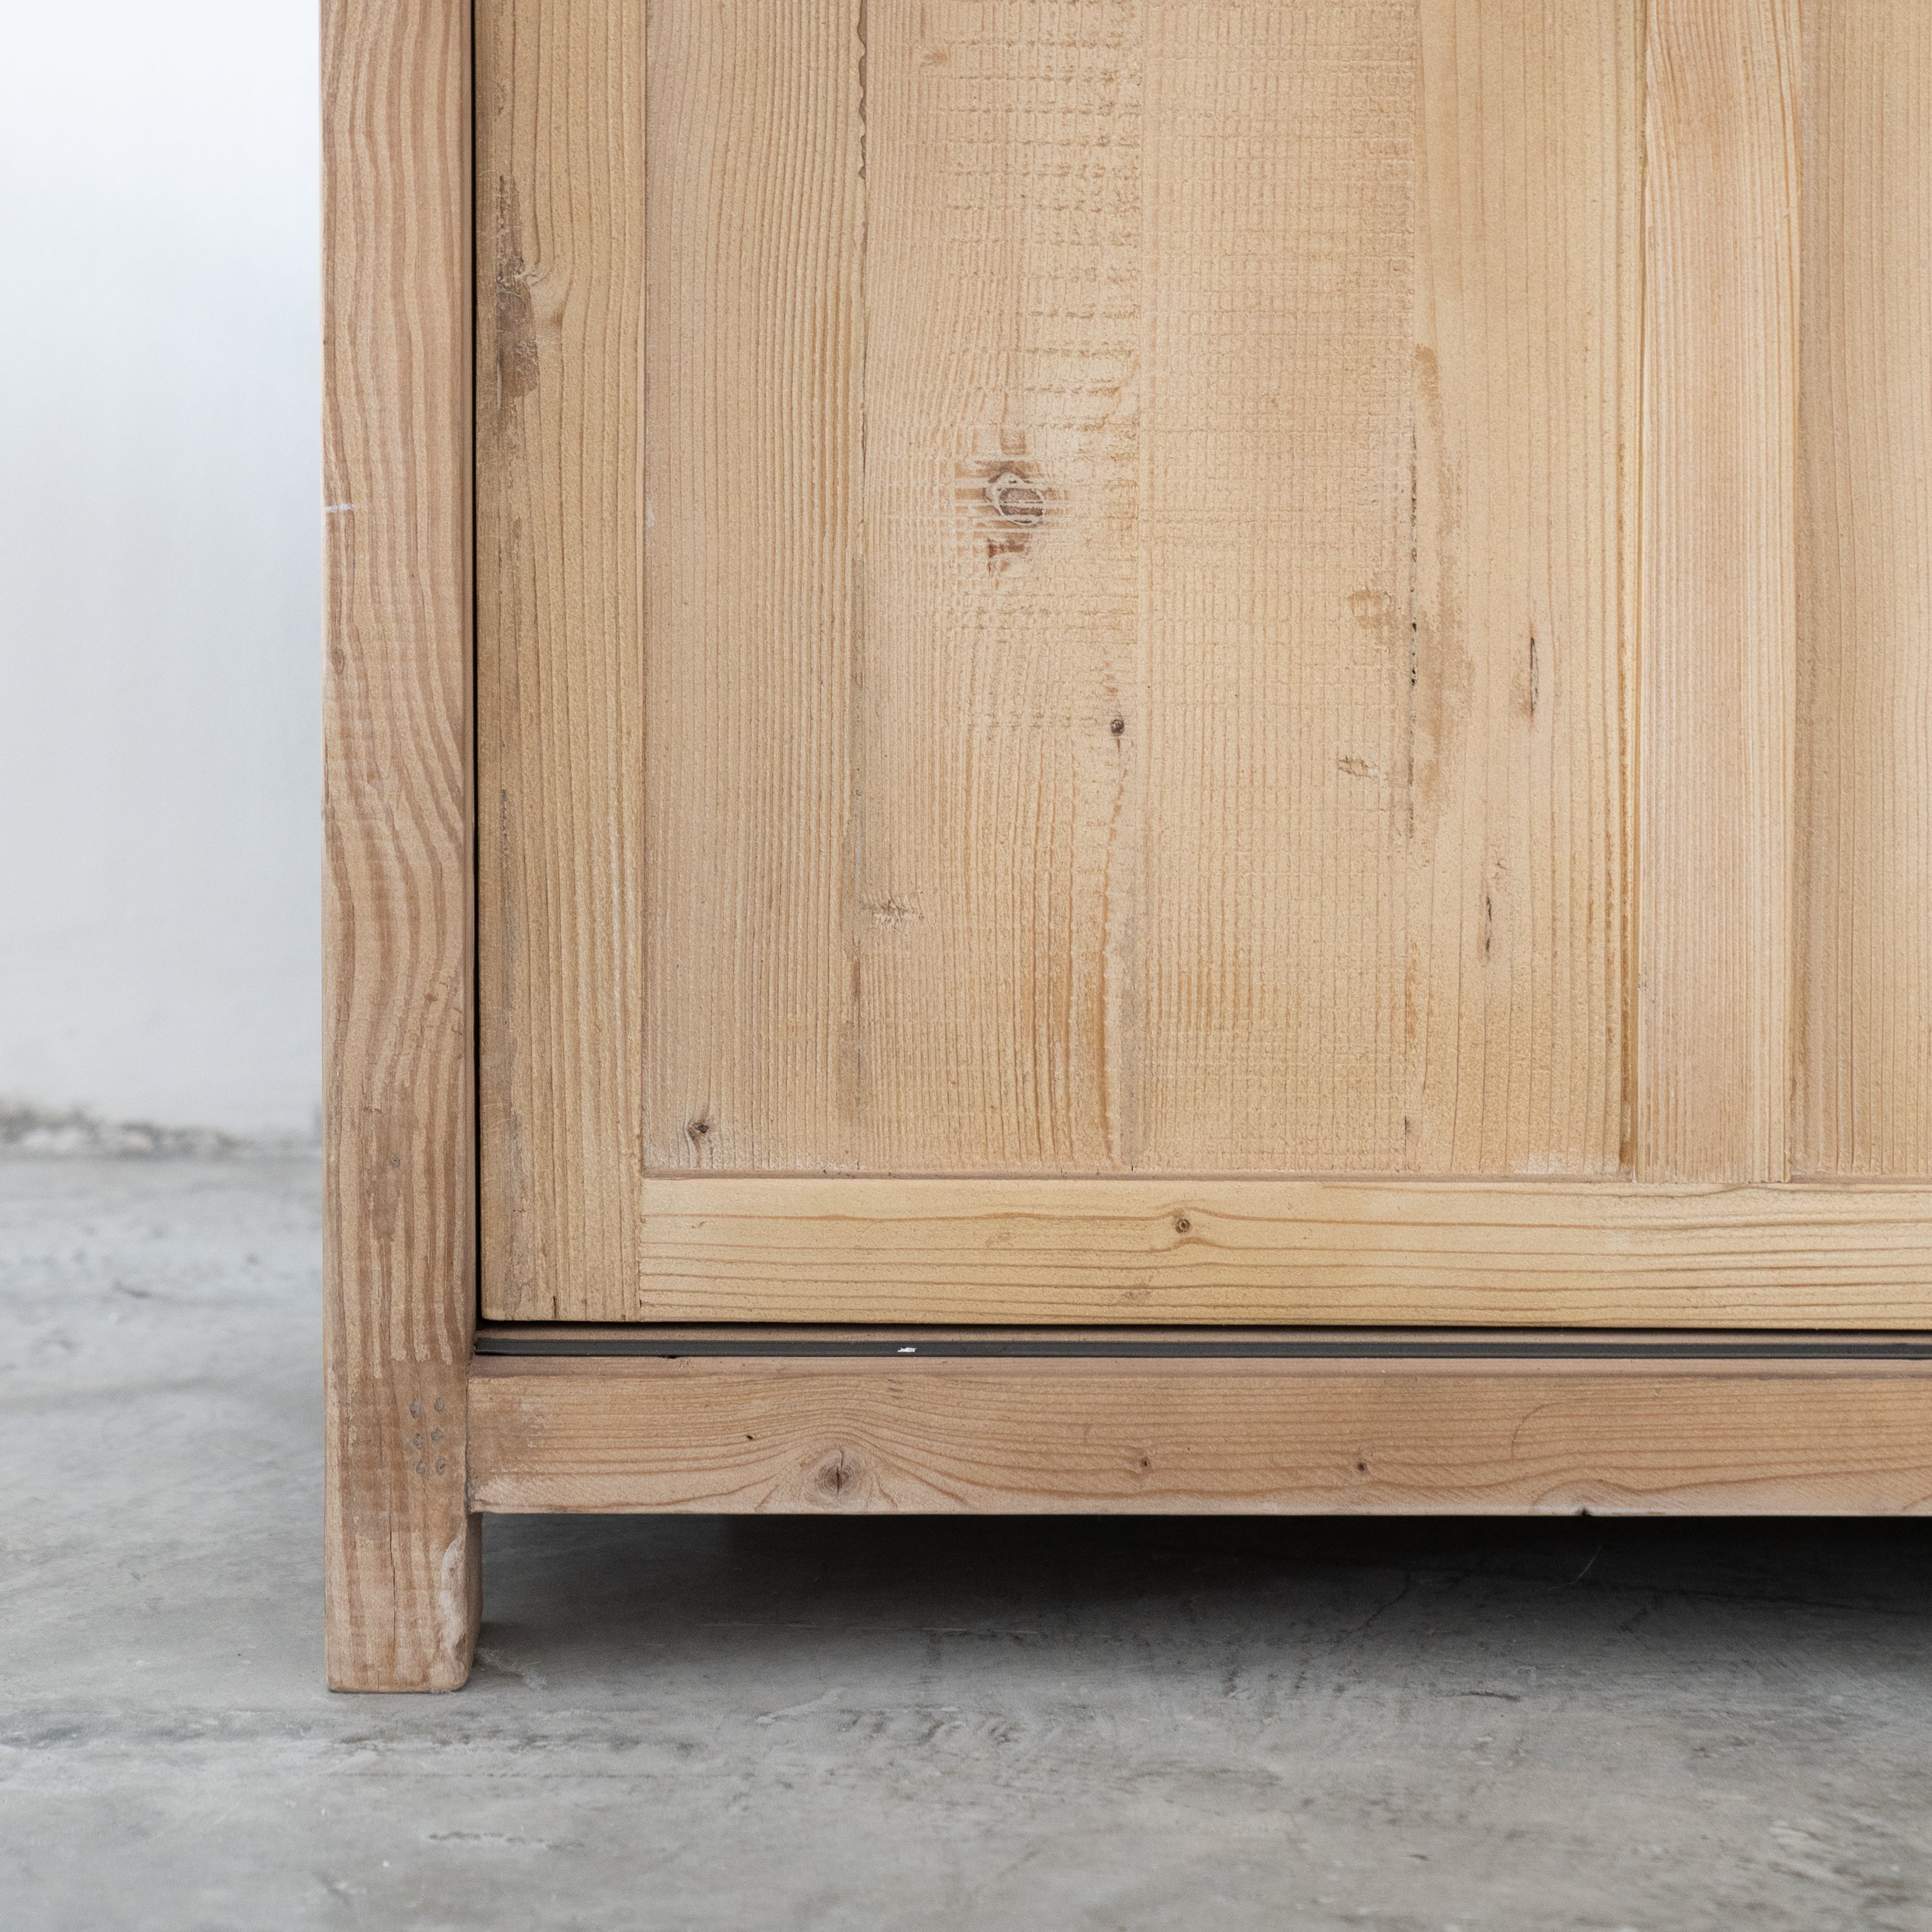 Roselyn Cupboard - Wood and Steel Furnitures